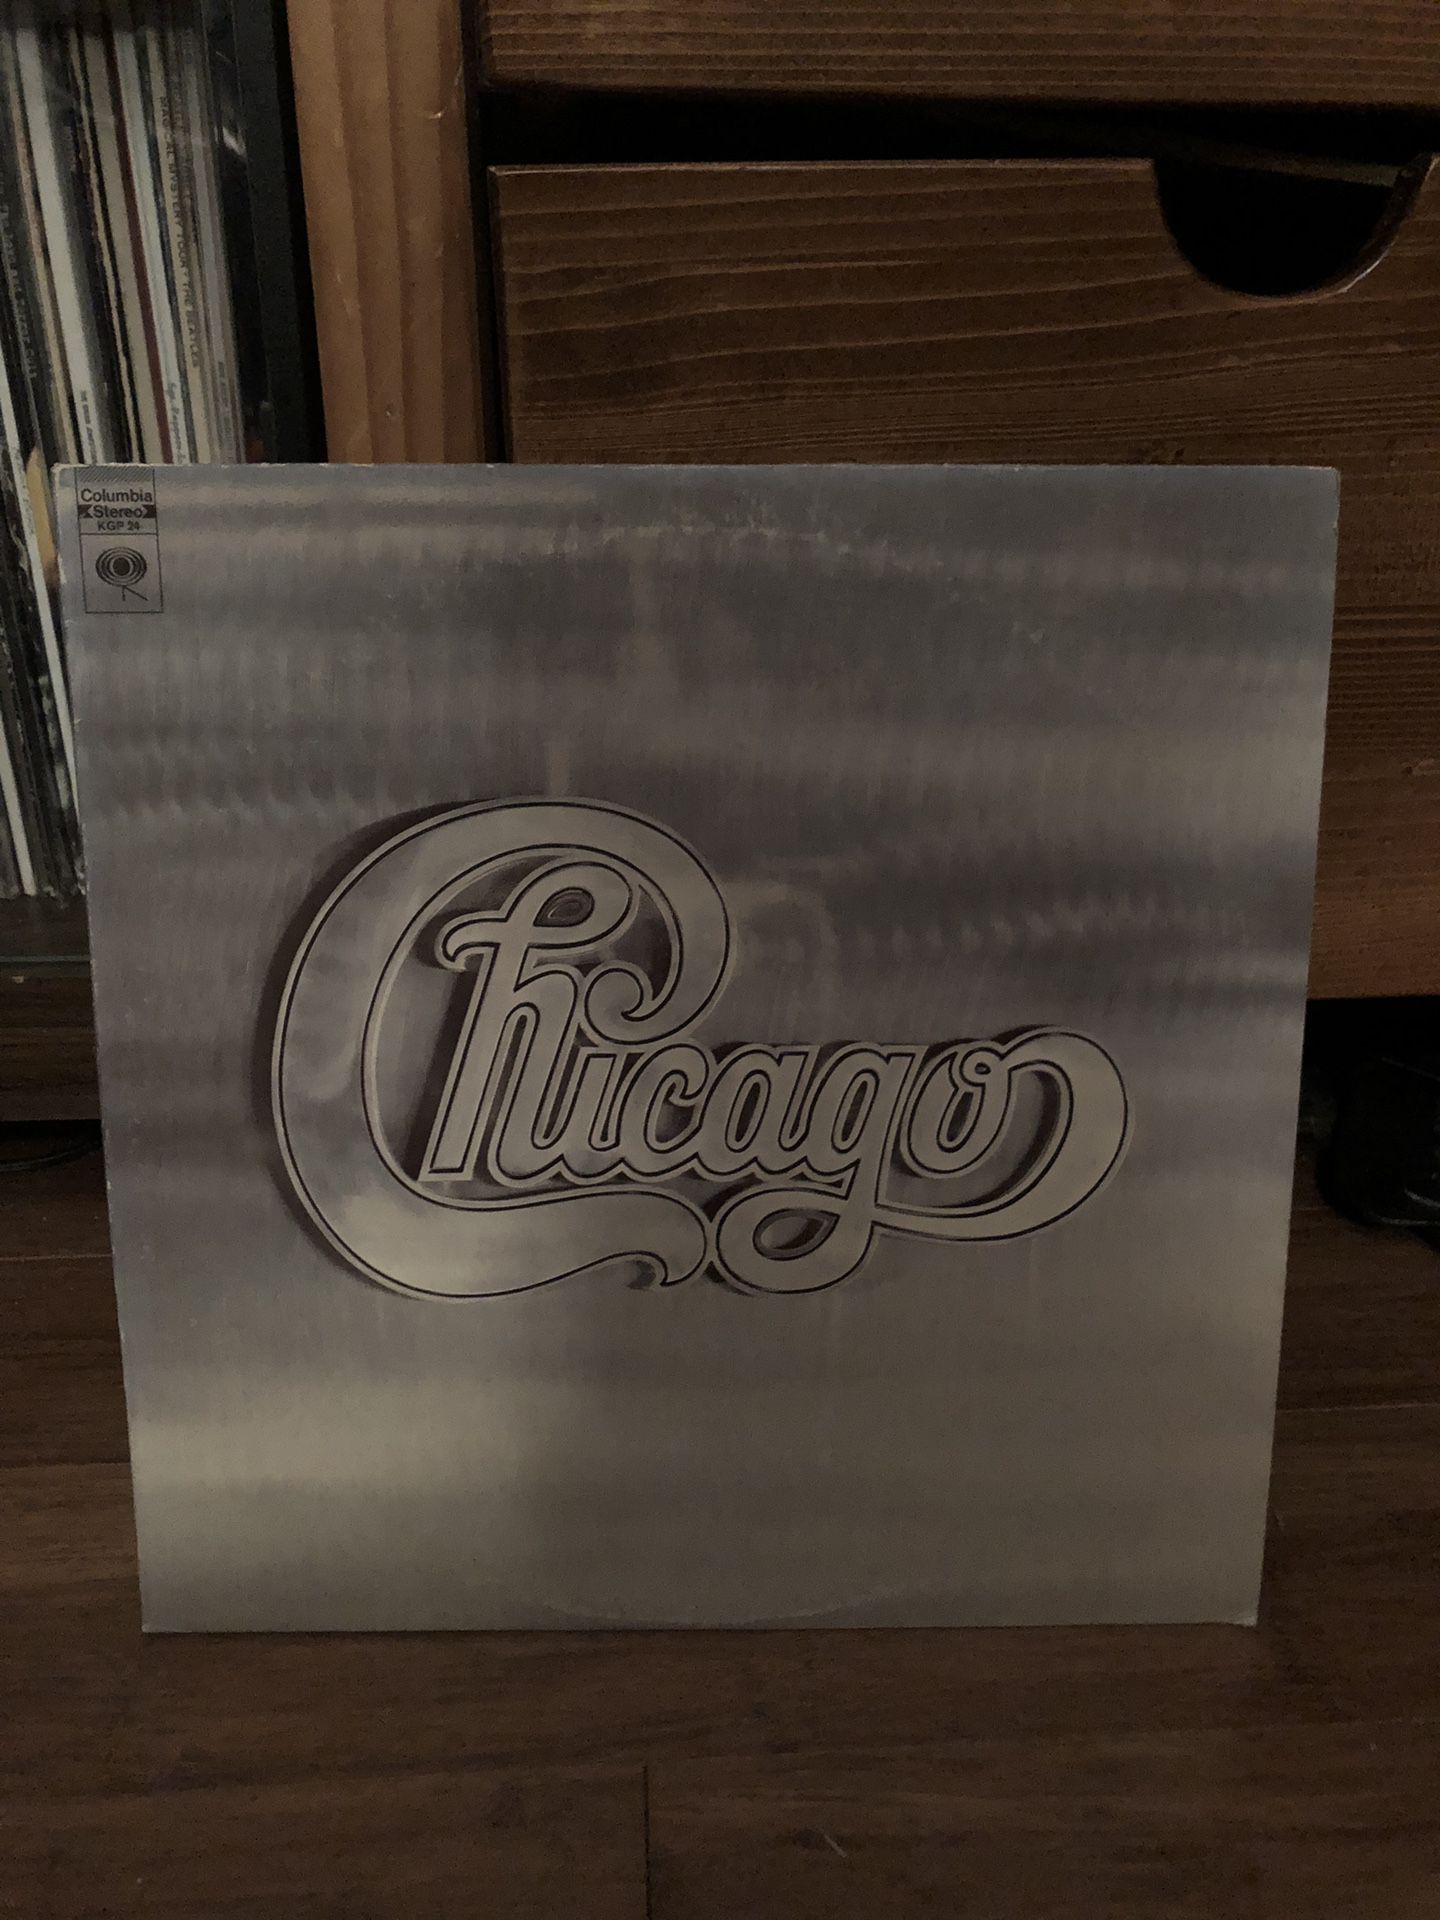 Chicago on Vinyl